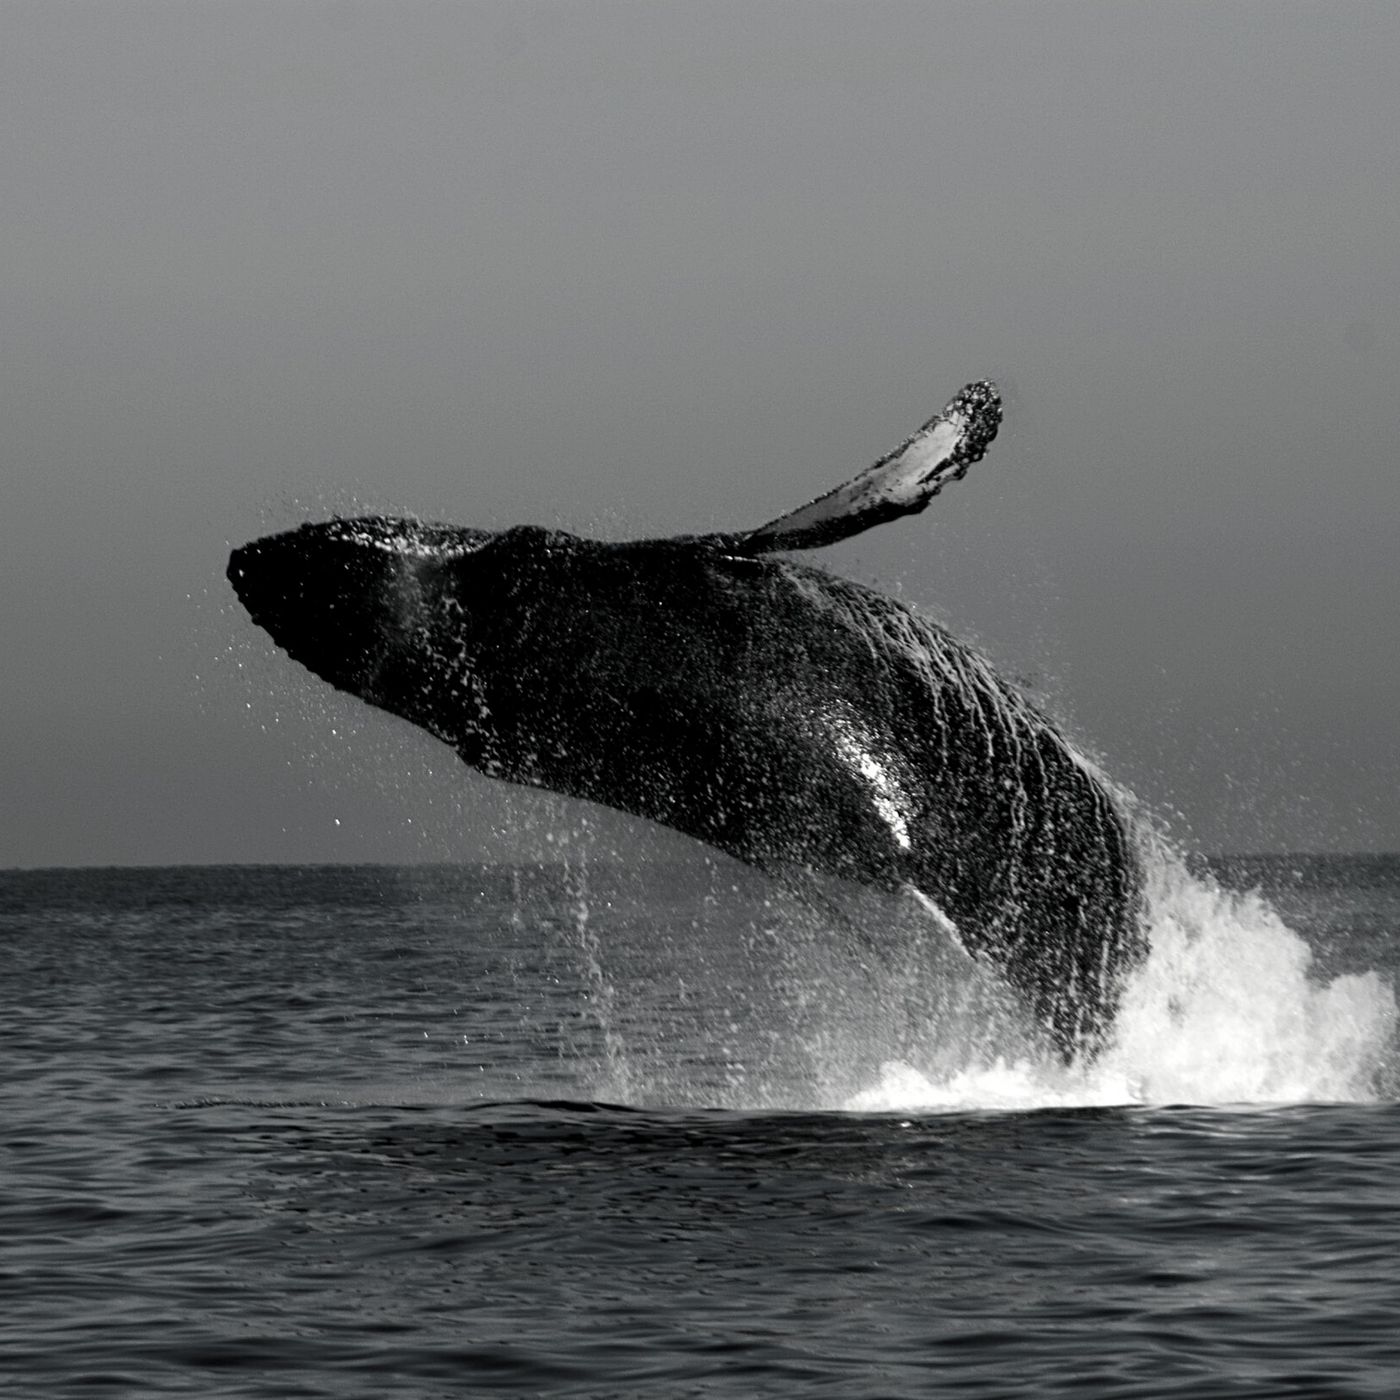 Alla Scoperta del Whale Watching! - (w/ A. Somà & G. Motta | Autore) S.1